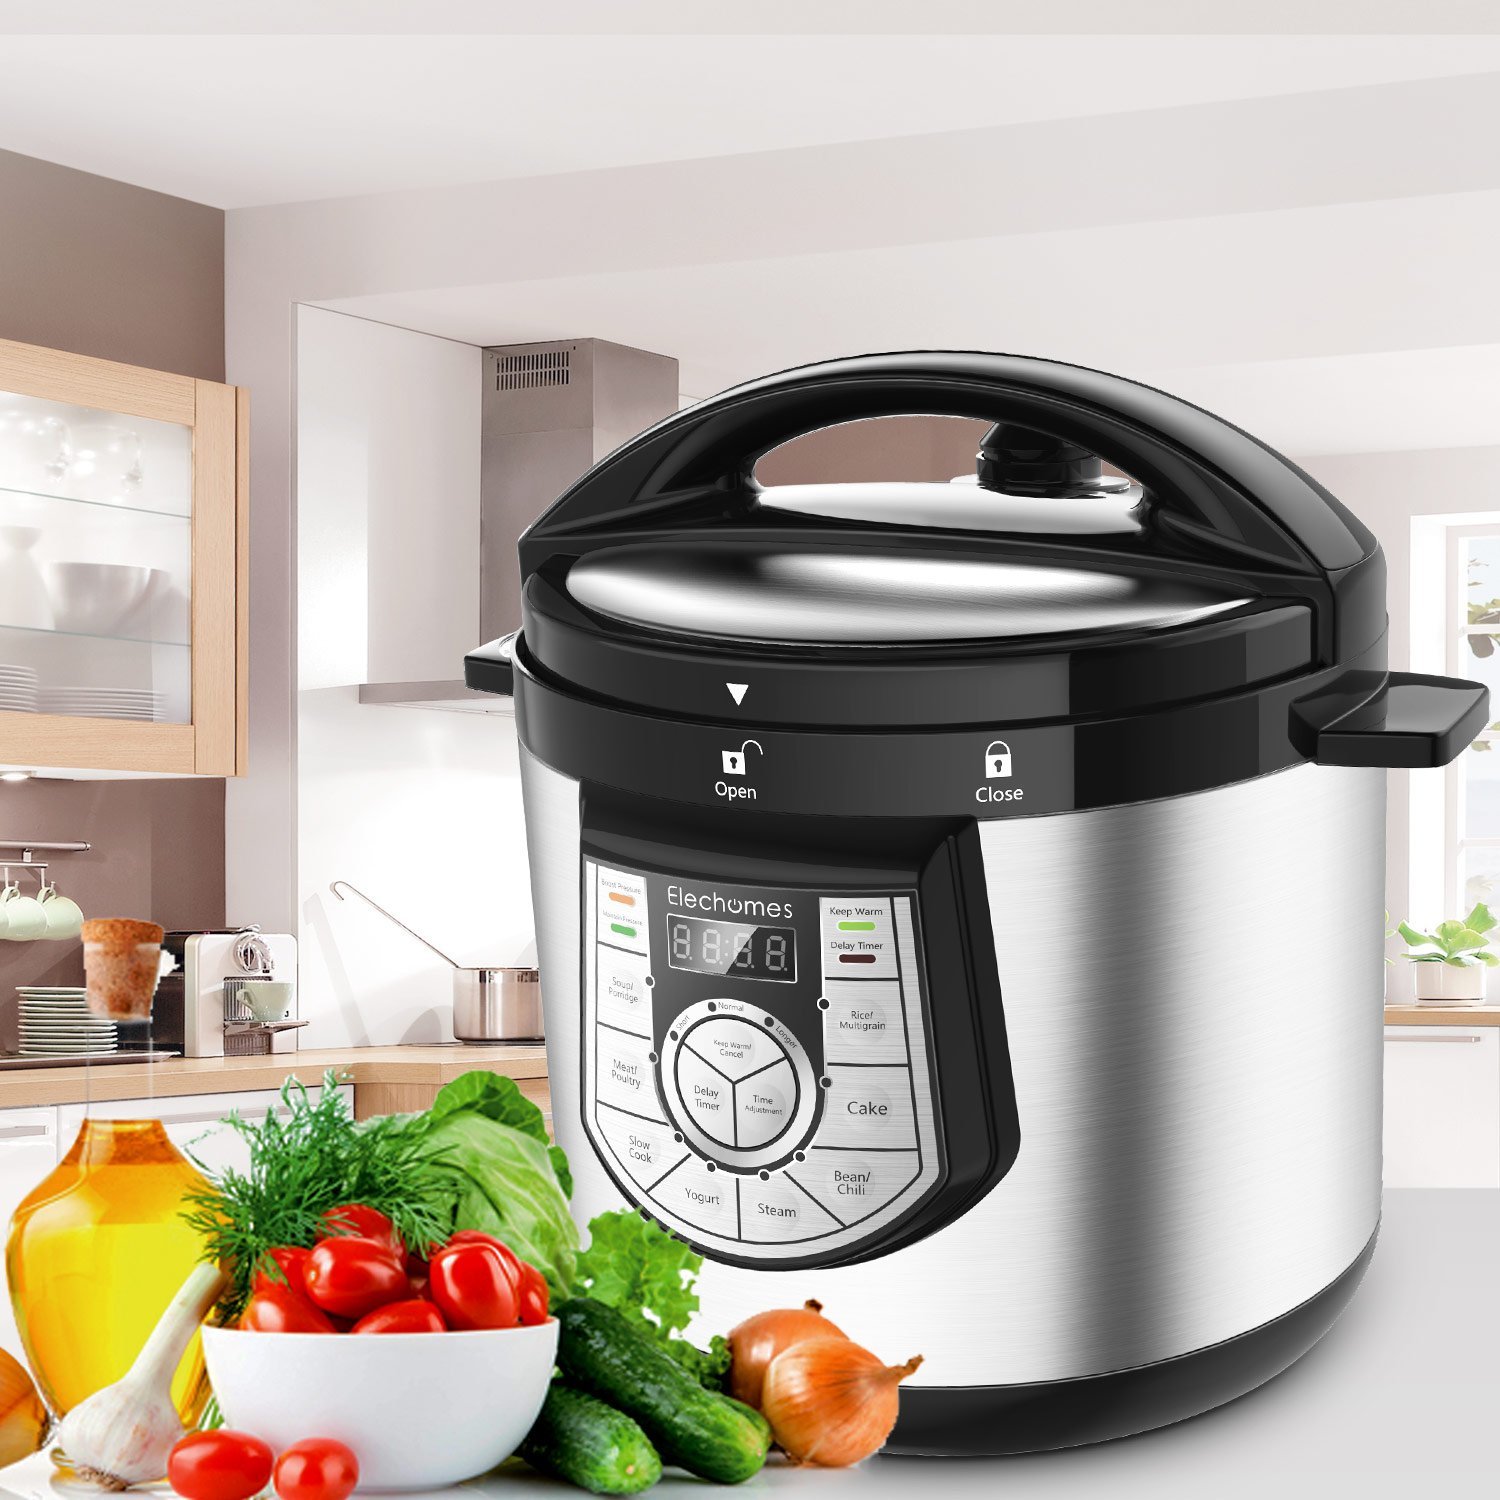 Instant Pot deals: Great Instant Pots & pressure cookers on sale